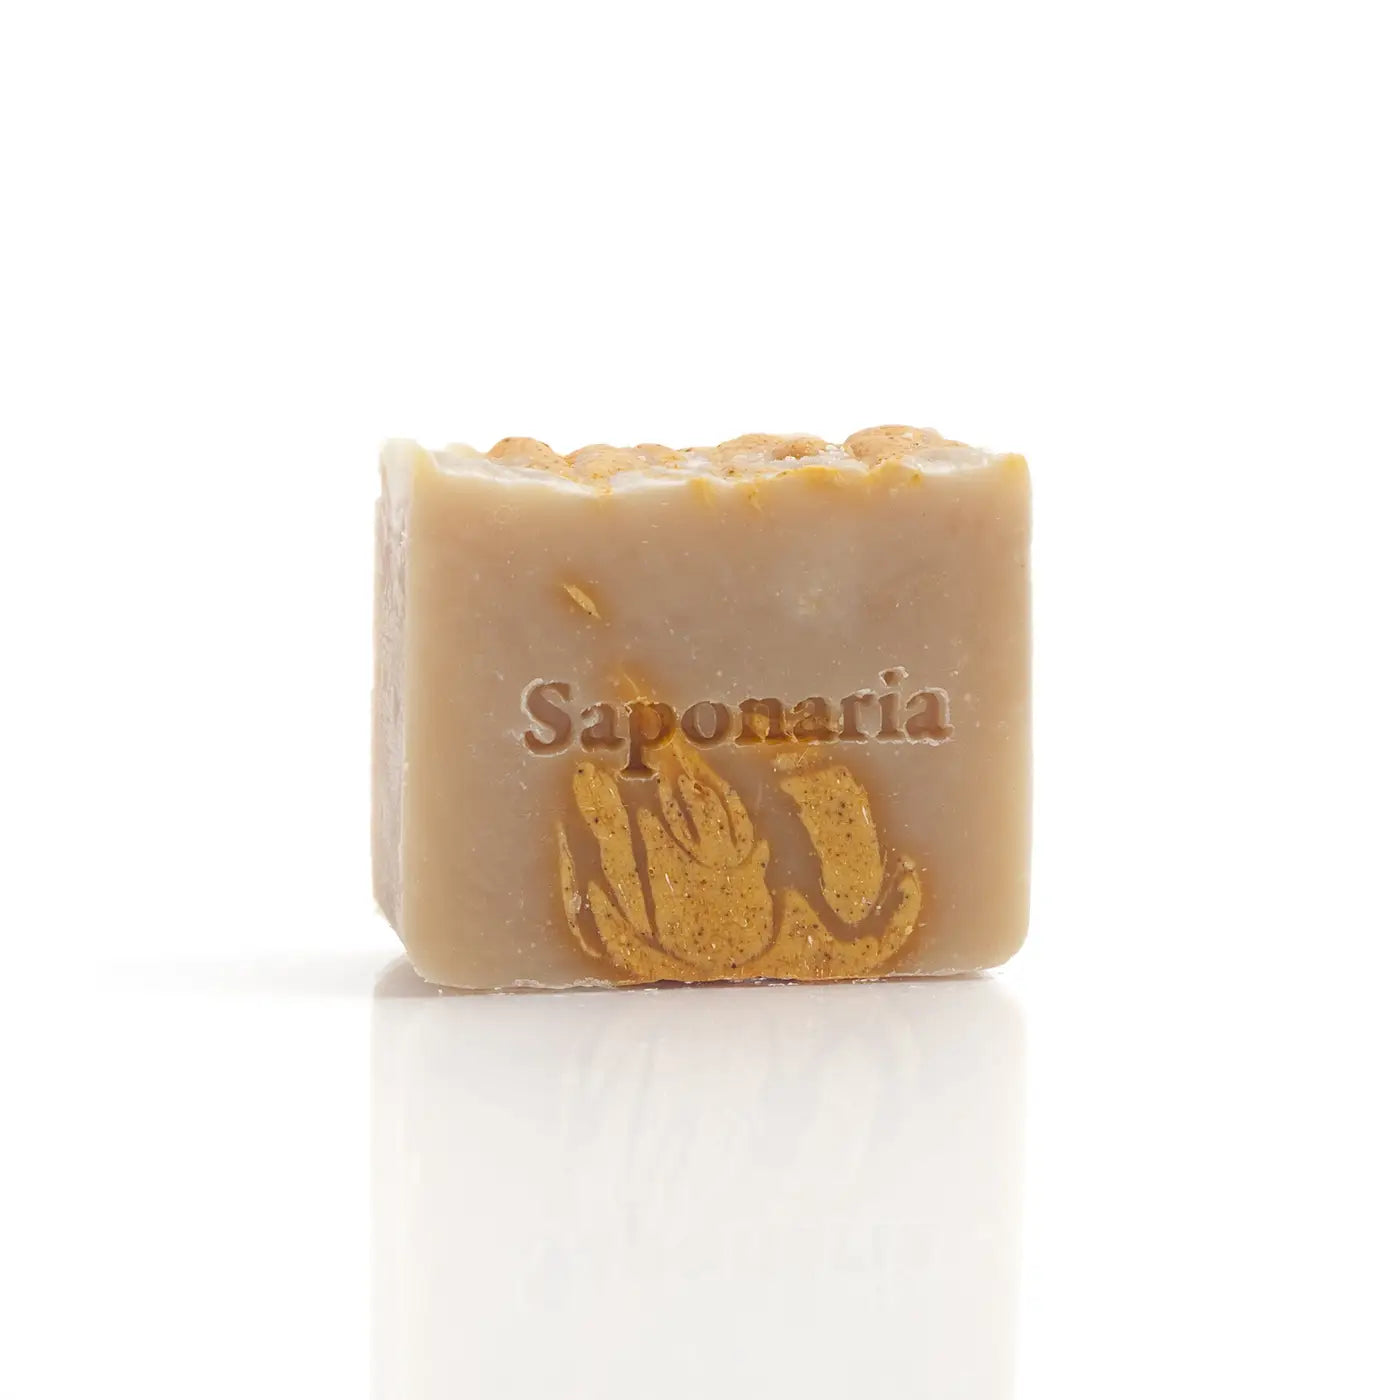 Saponaria soap energizing orange